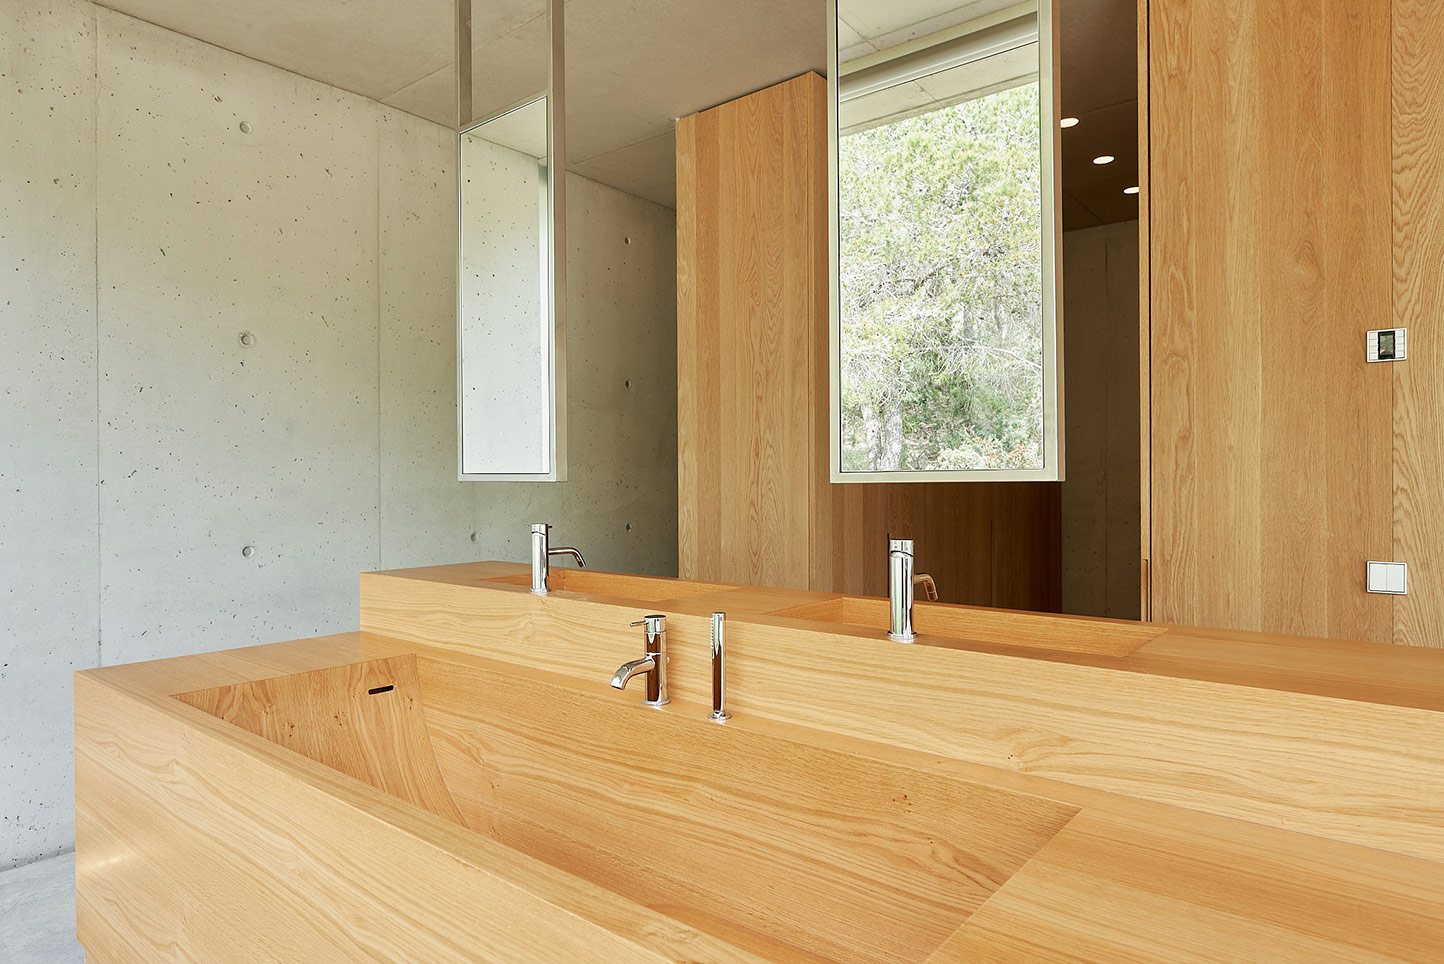 Image no. 3 of Custom wooden bathtub and vanity in Oak - Bathroom Island